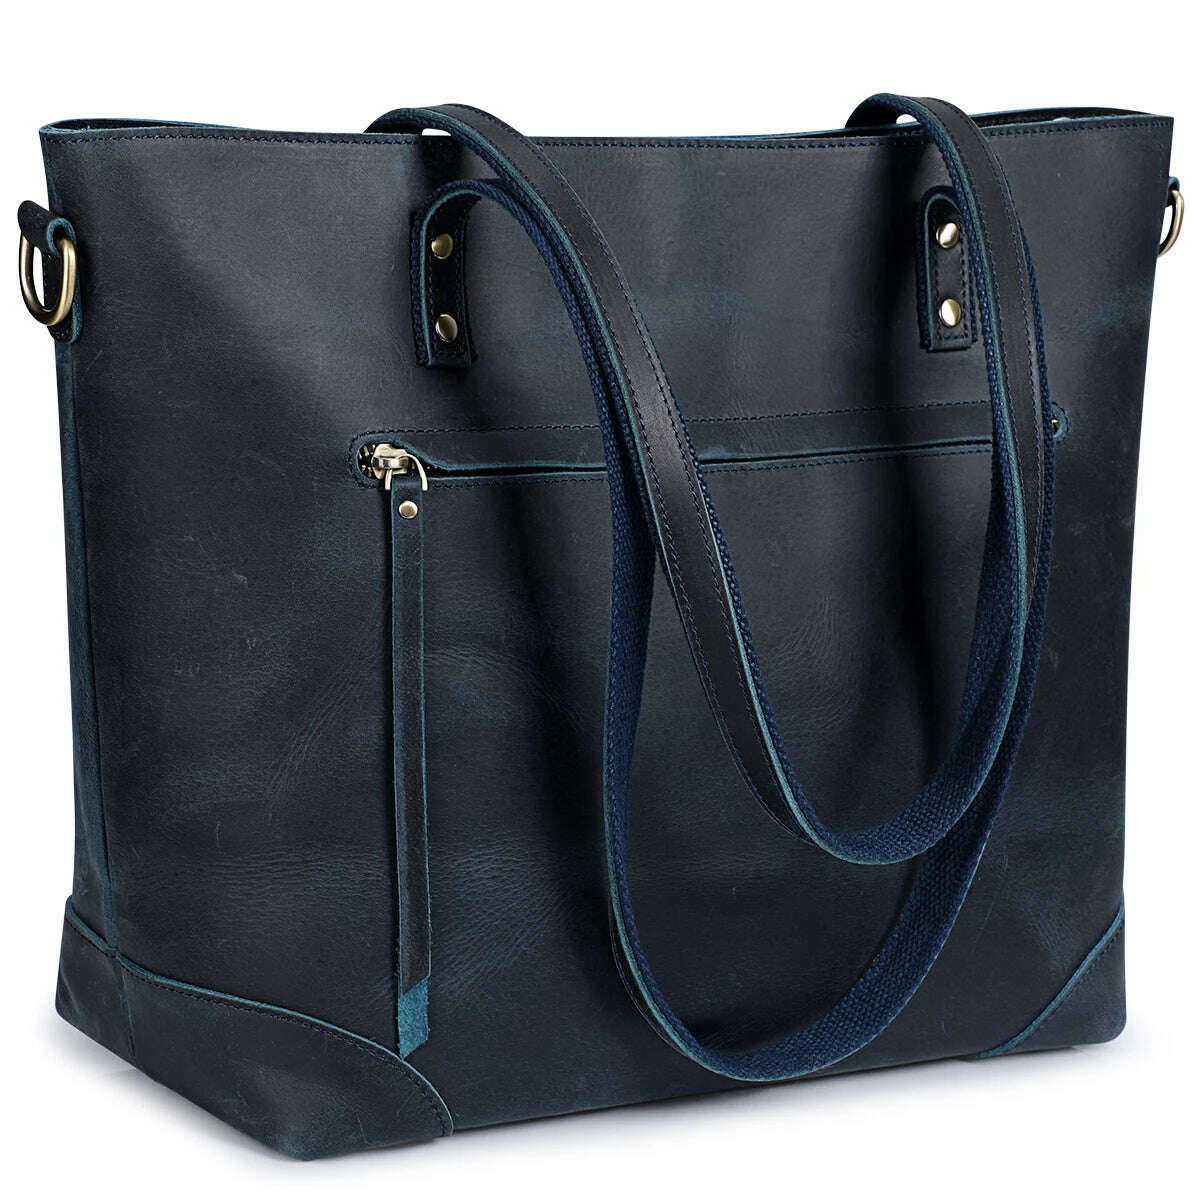 KIMLUD, S-ZONE Vintage Genuine Leather Shoulder Bag Work Totes for Women Purse Handbag with Back Zipper Pocket Large, Dark Blue / China, KIMLUD Womens Clothes